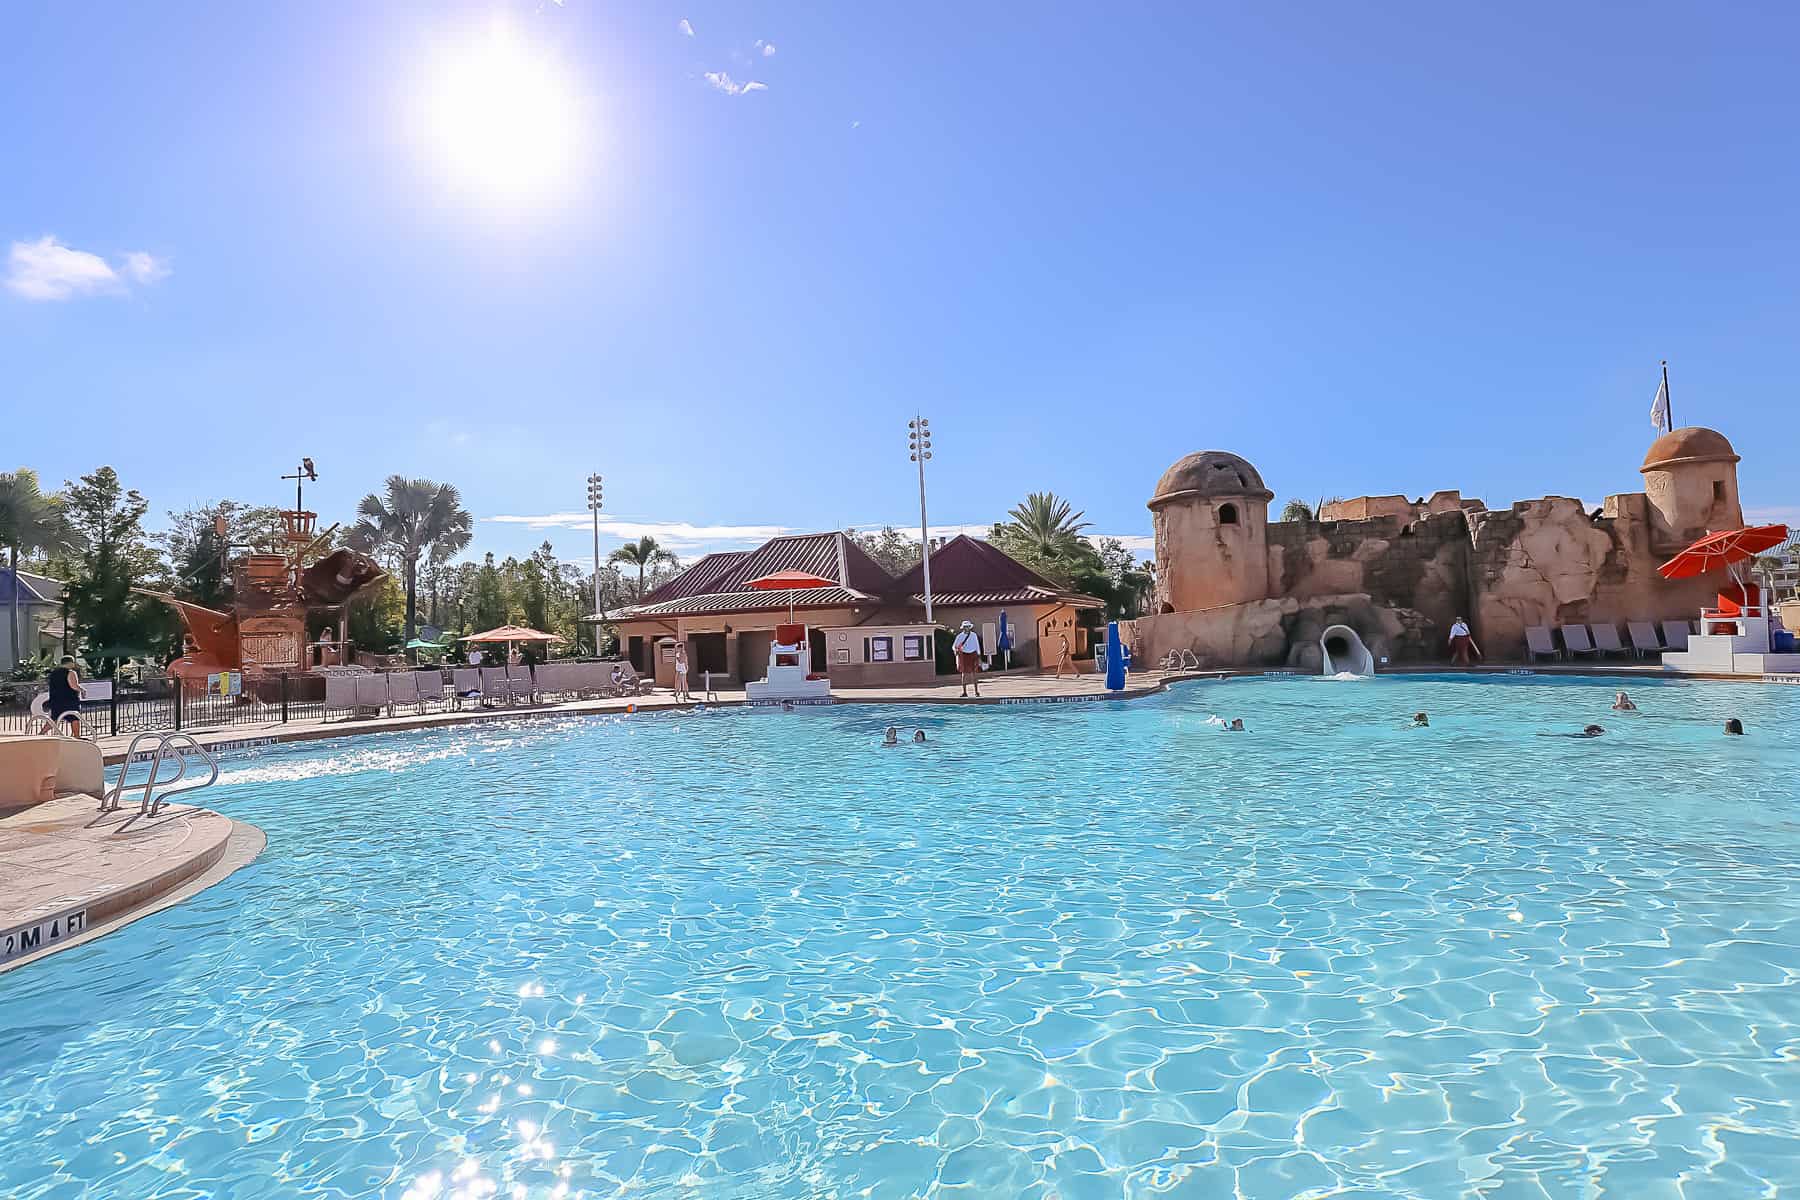 The resort feature pool at Disney's Caribbean Beach